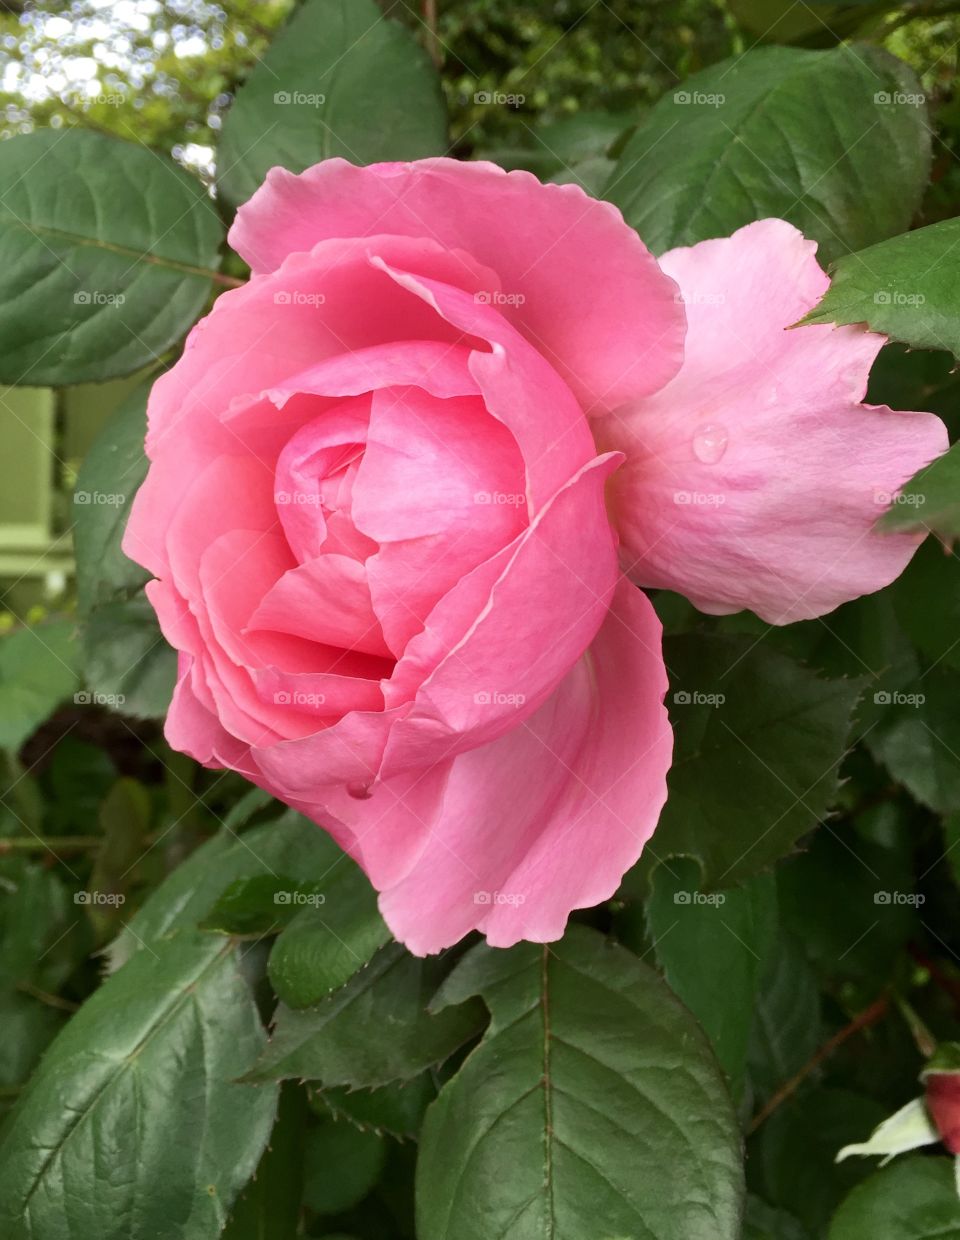 Water drop on pink rose flower